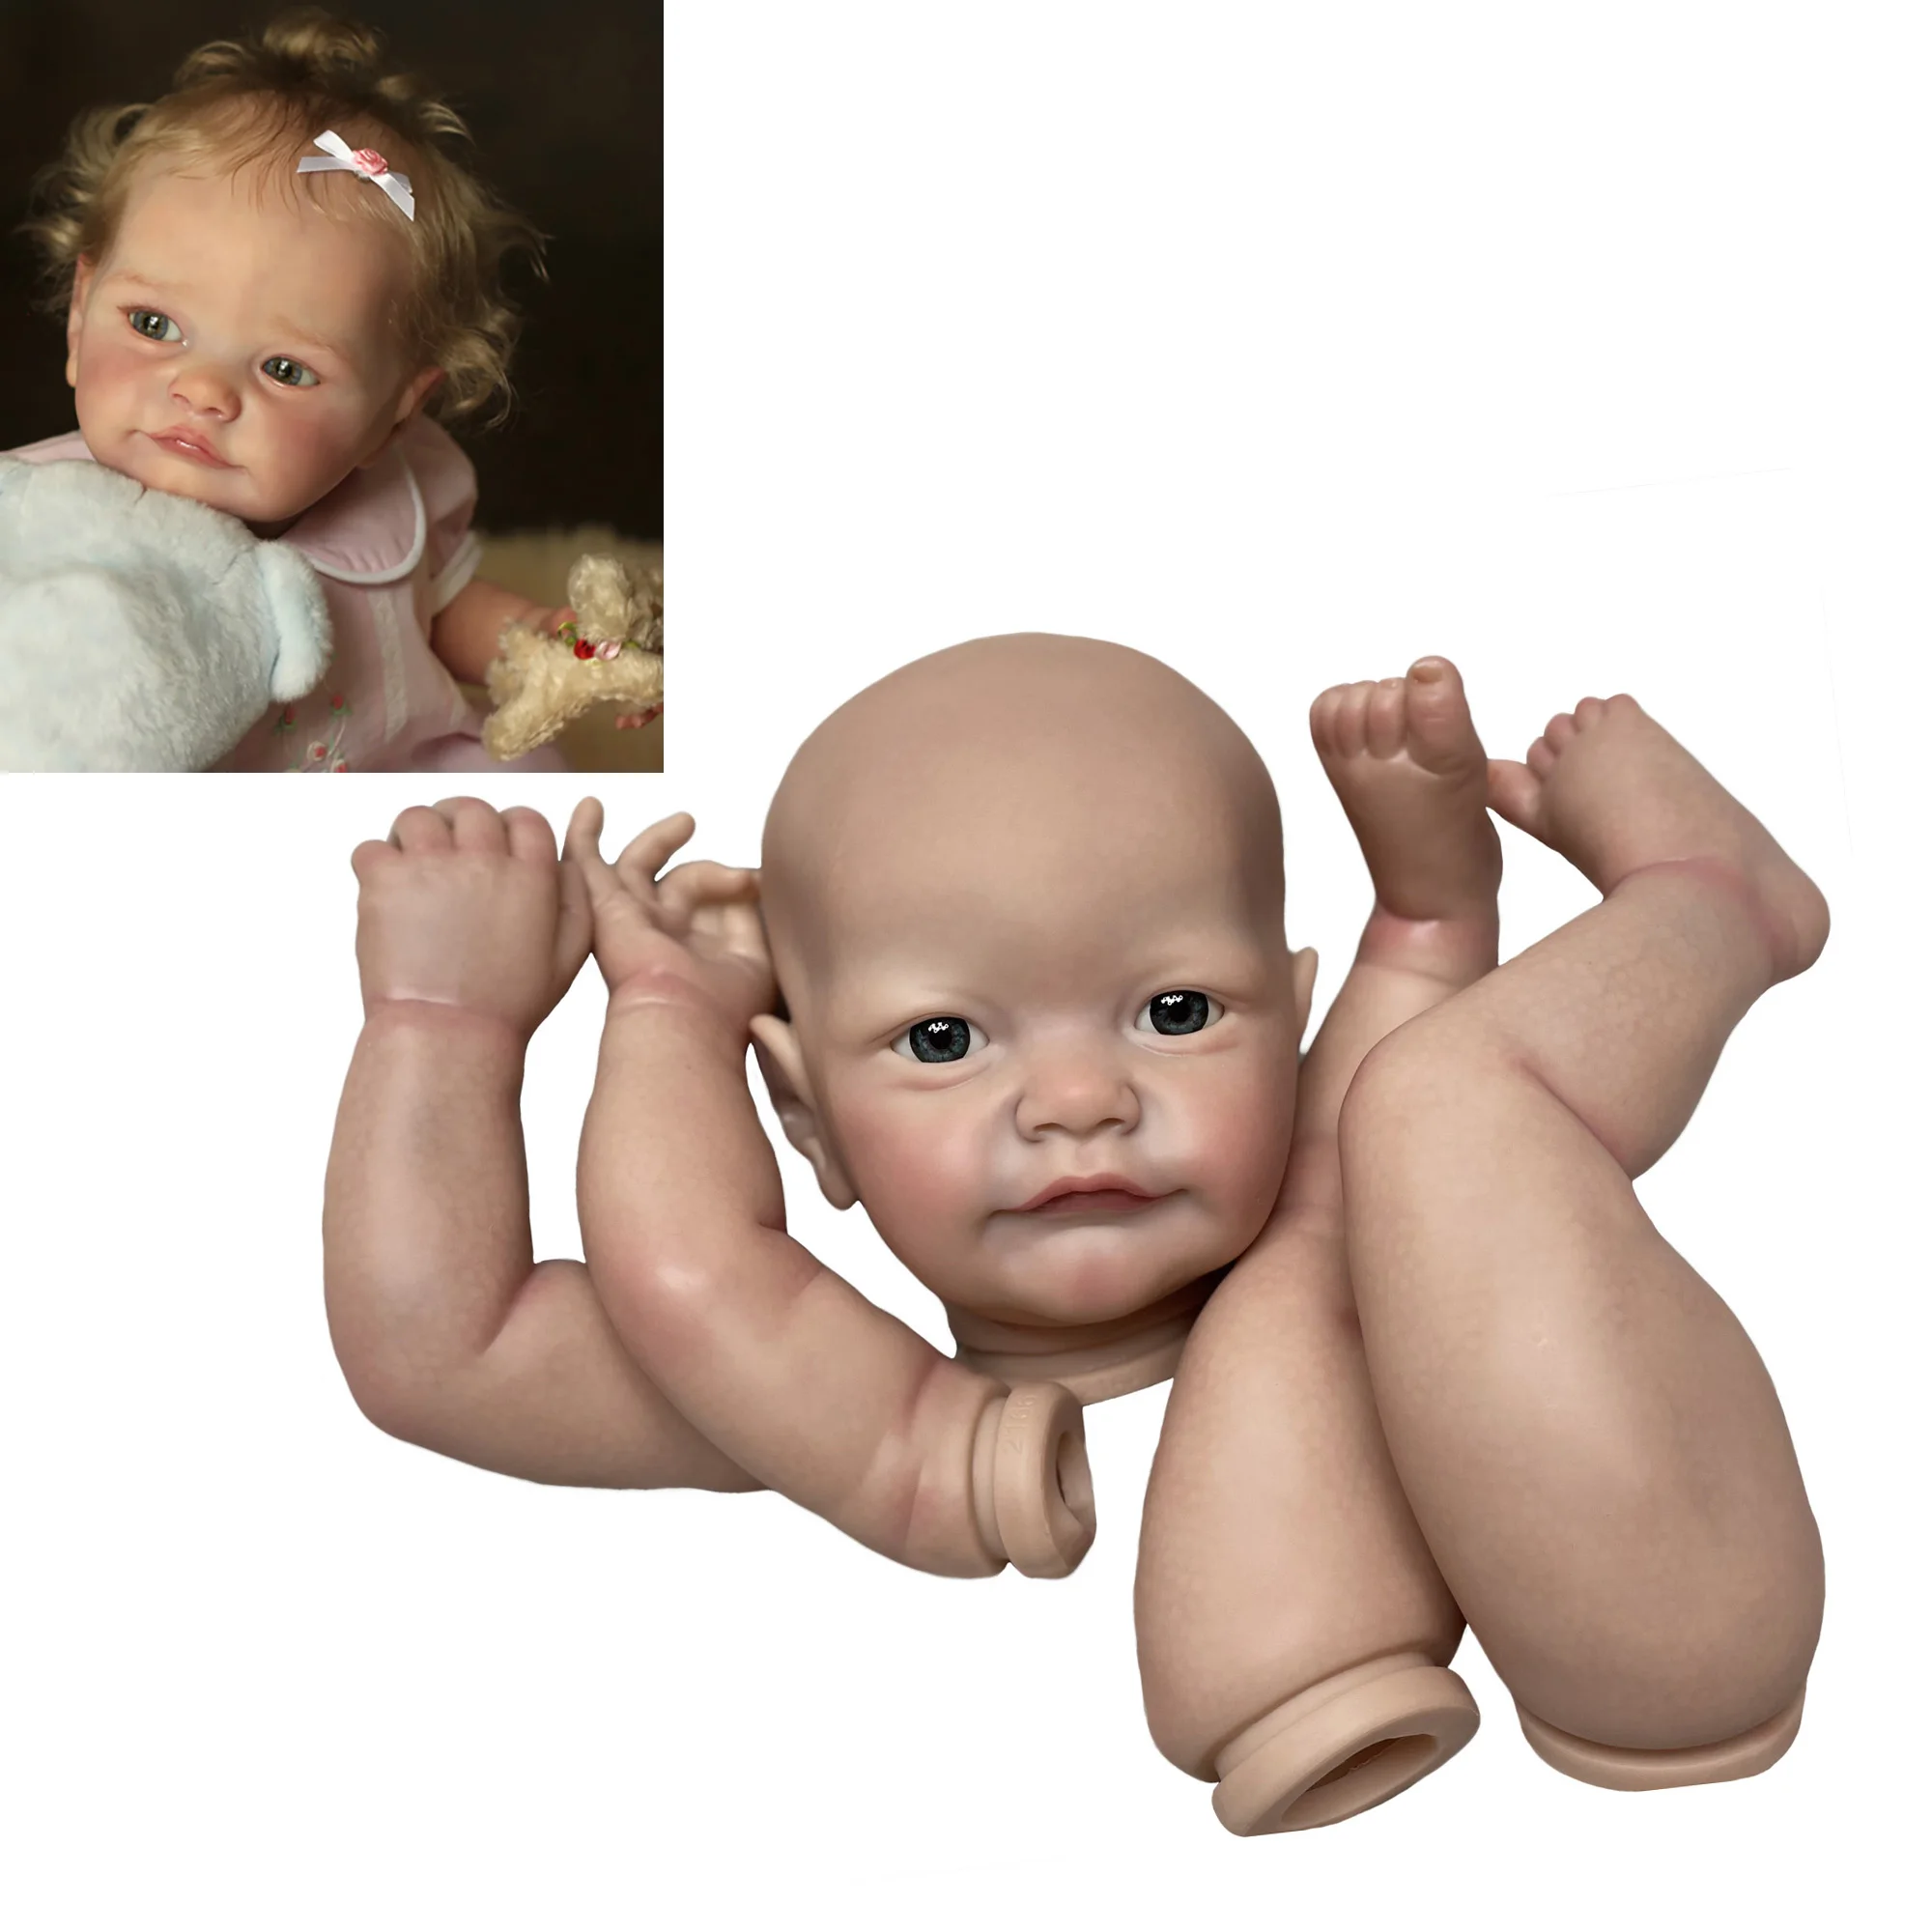 Hot Sale Boneca Bebe Reborn Комплекти Lifelike Newborn Собственоръчно Reborn Кукла Kit Include Body And Eyes бебето бон кукла оригинал 0